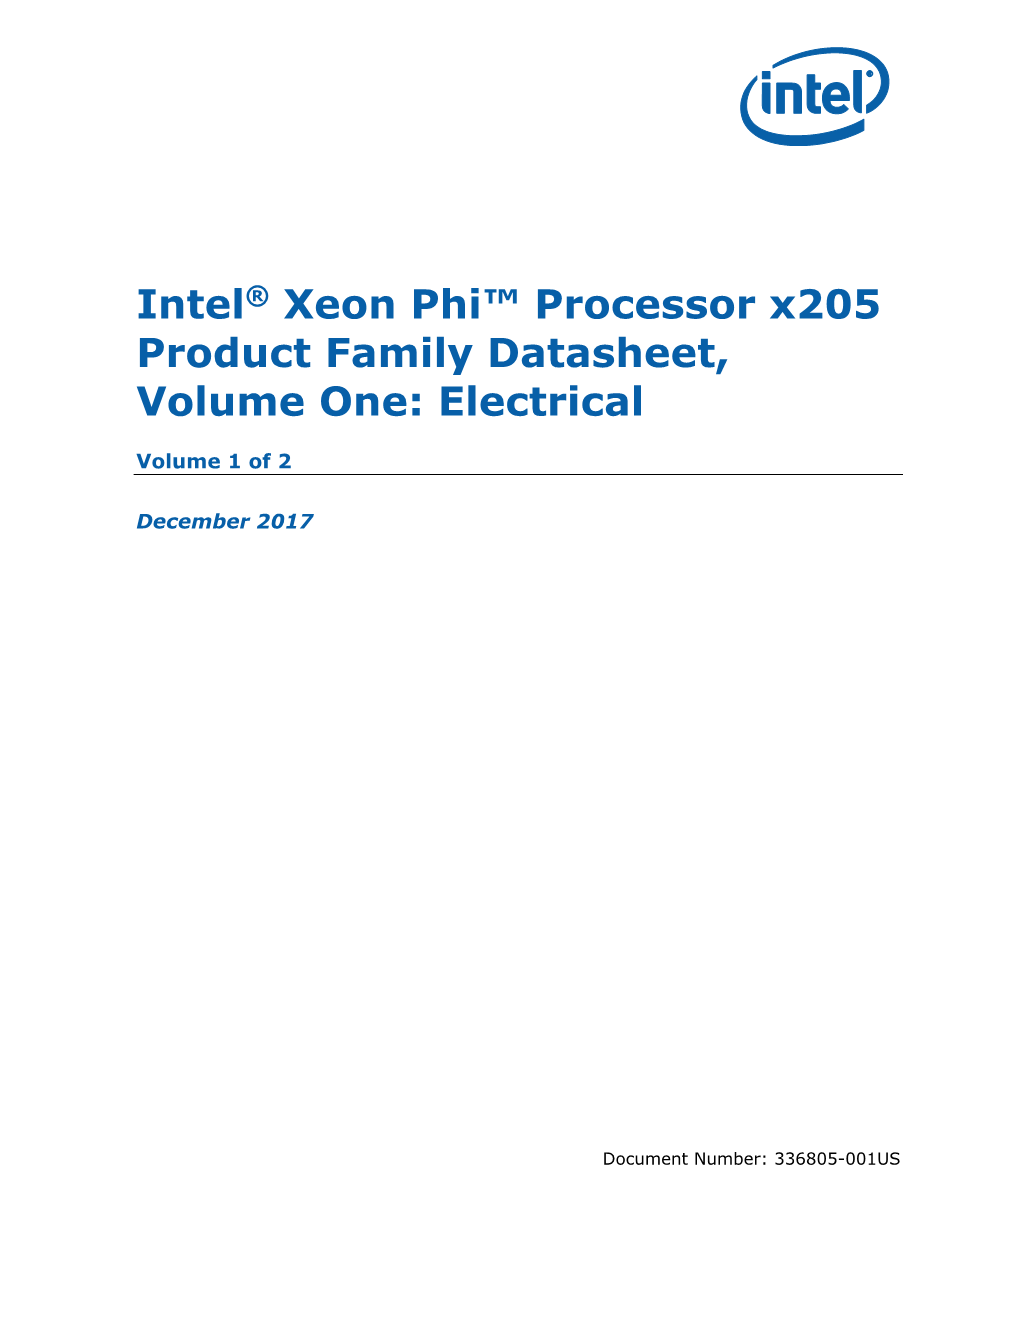 Intel® Xeon Phi™ Processor X205 Product Family Datasheet, Volume One: Electrical